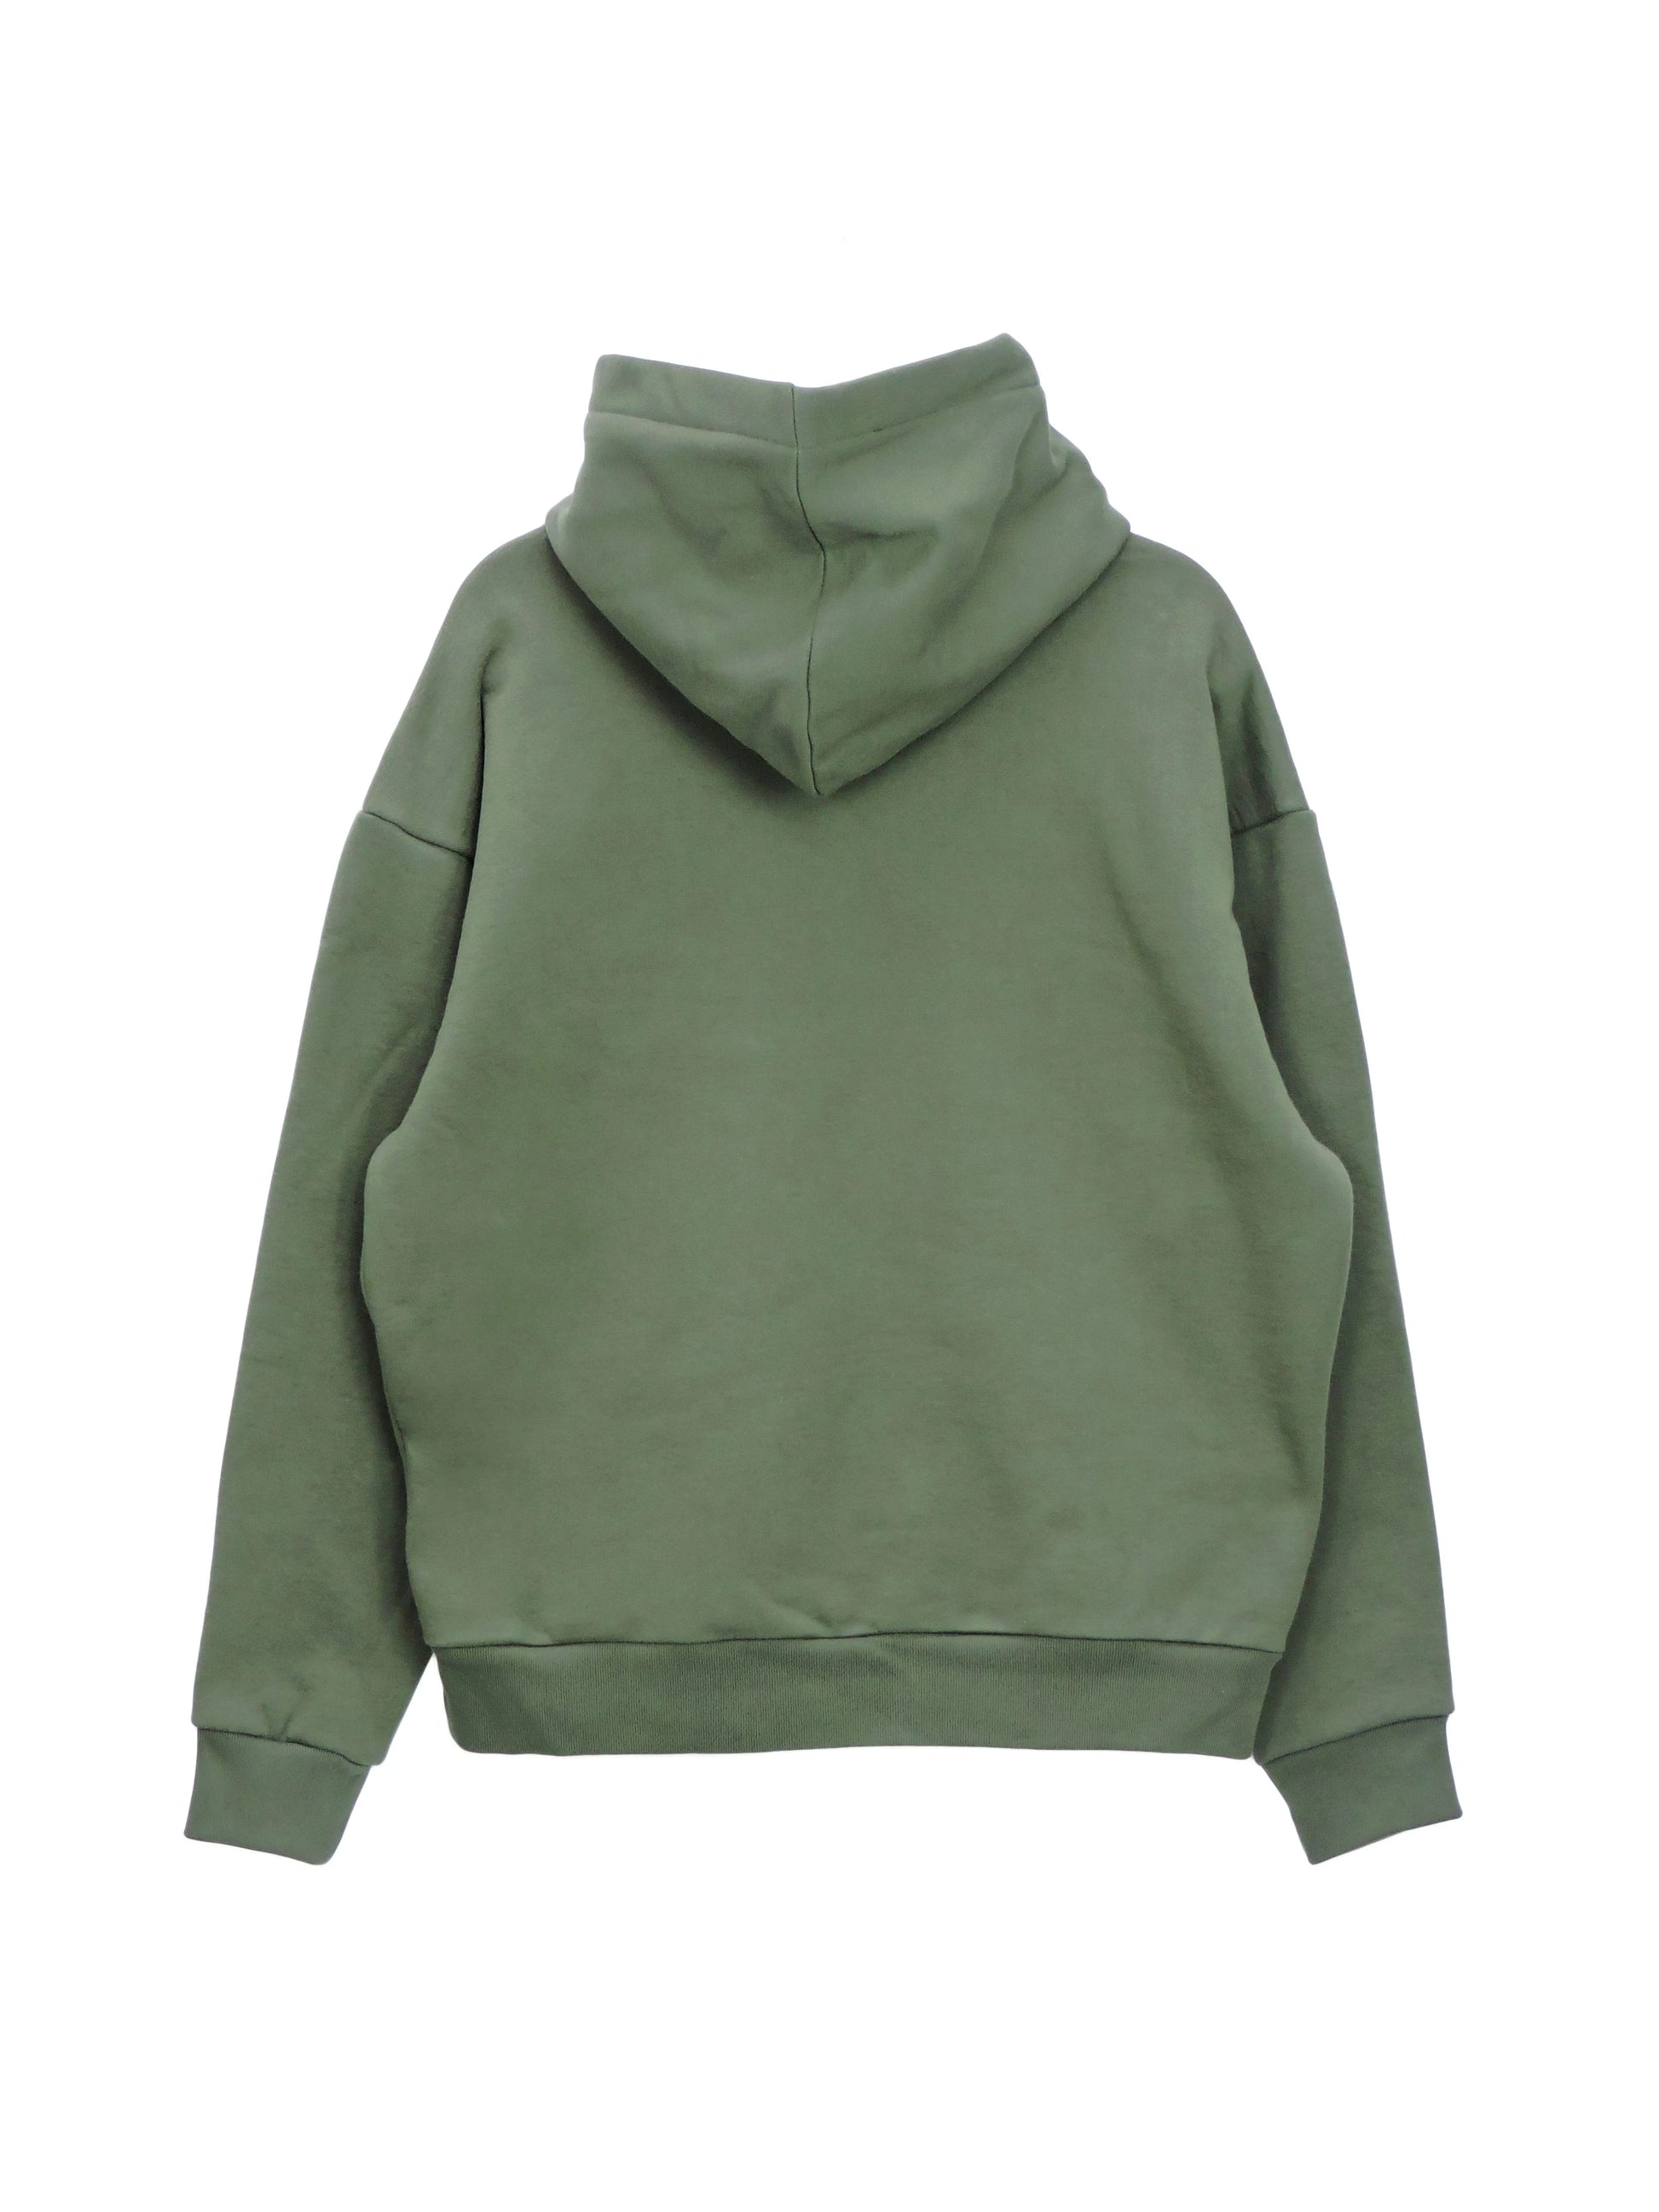  Men's Christmas Hooded Sweatshirt Fleece Hoodies Trendy  Oversized Long Sleeve Soft Warm Fall Sweatshirt Green : Pet Supplies